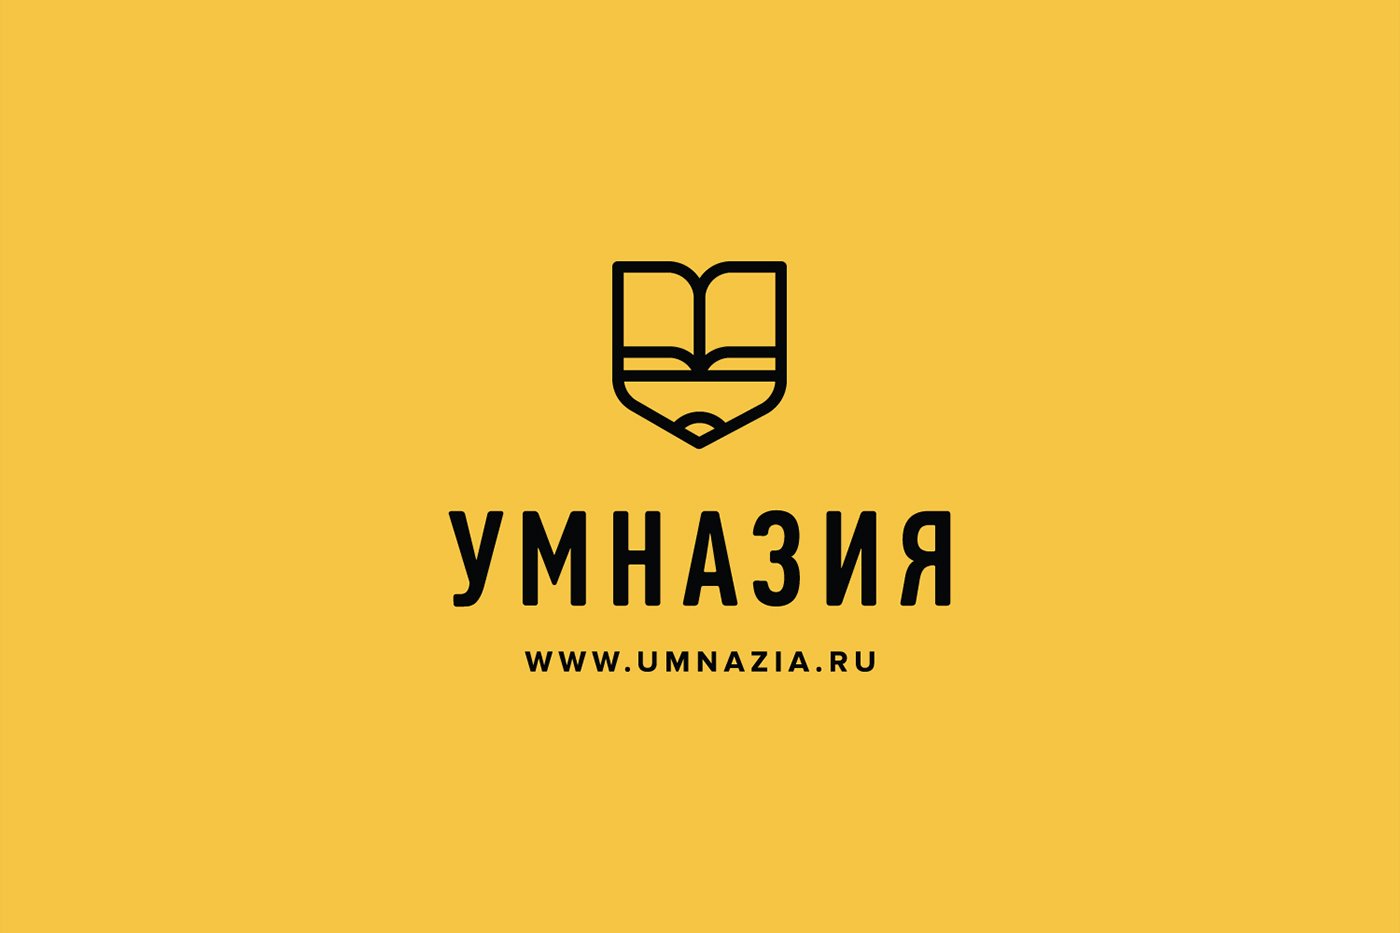 Umnazia在线教育品牌视觉VI形象设计形式-VI设计1